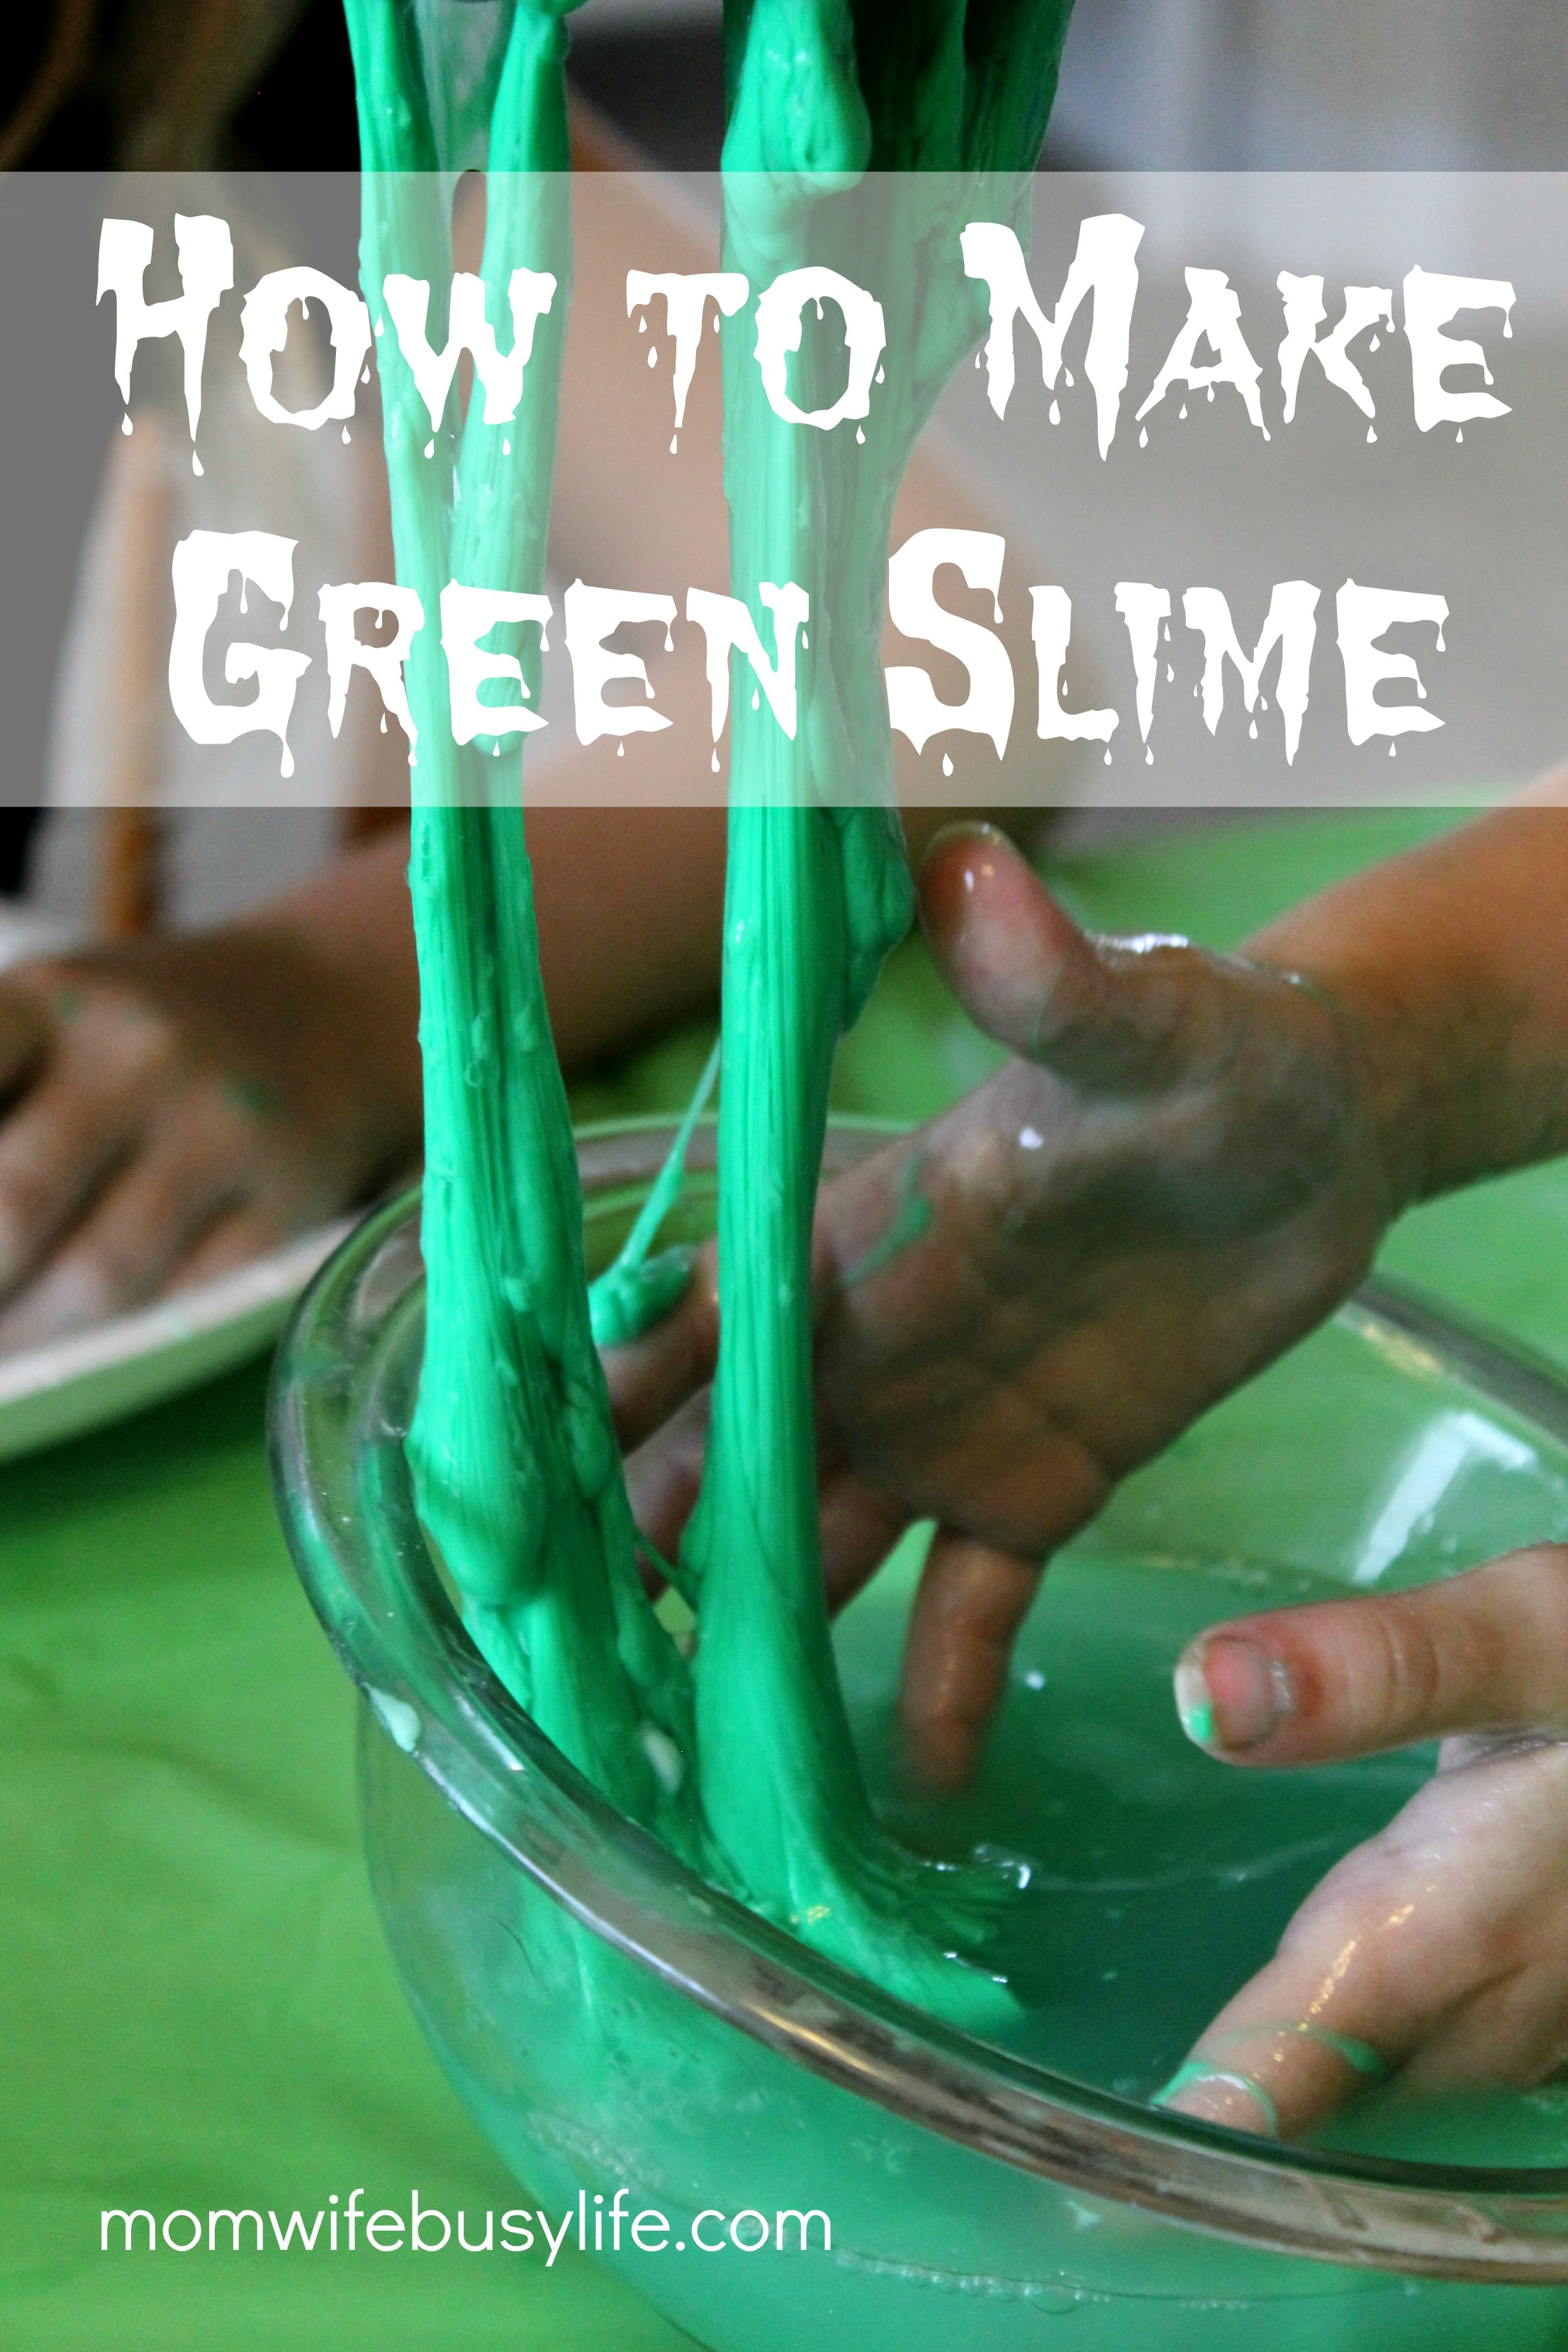 ☑ How to make green halloween slime